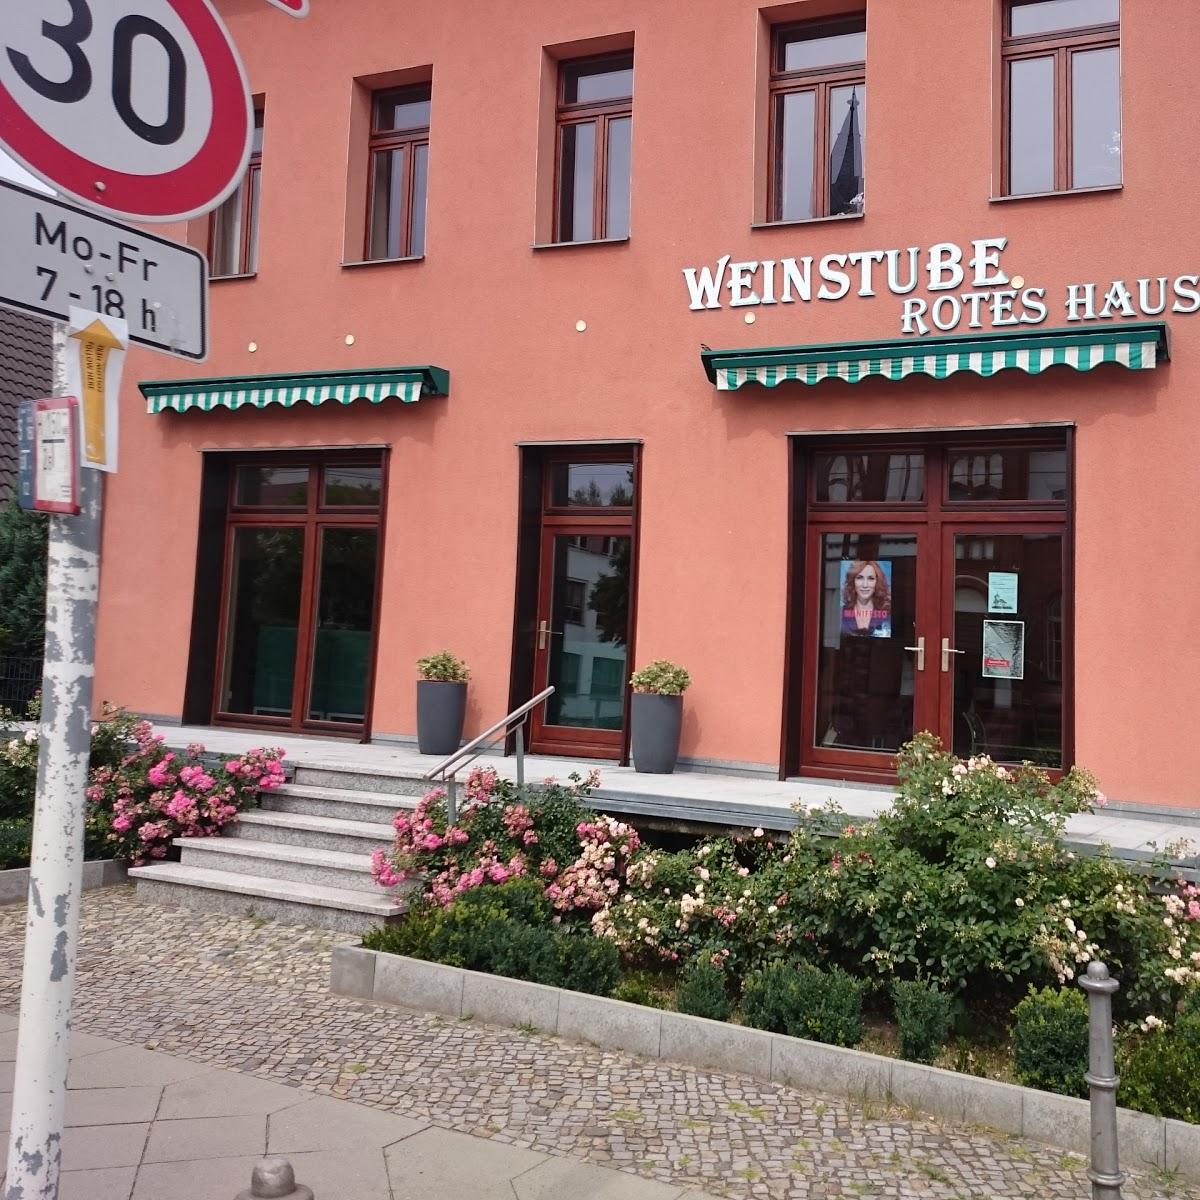 Restaurant "Weinstube Rotes Haus" in Berlin